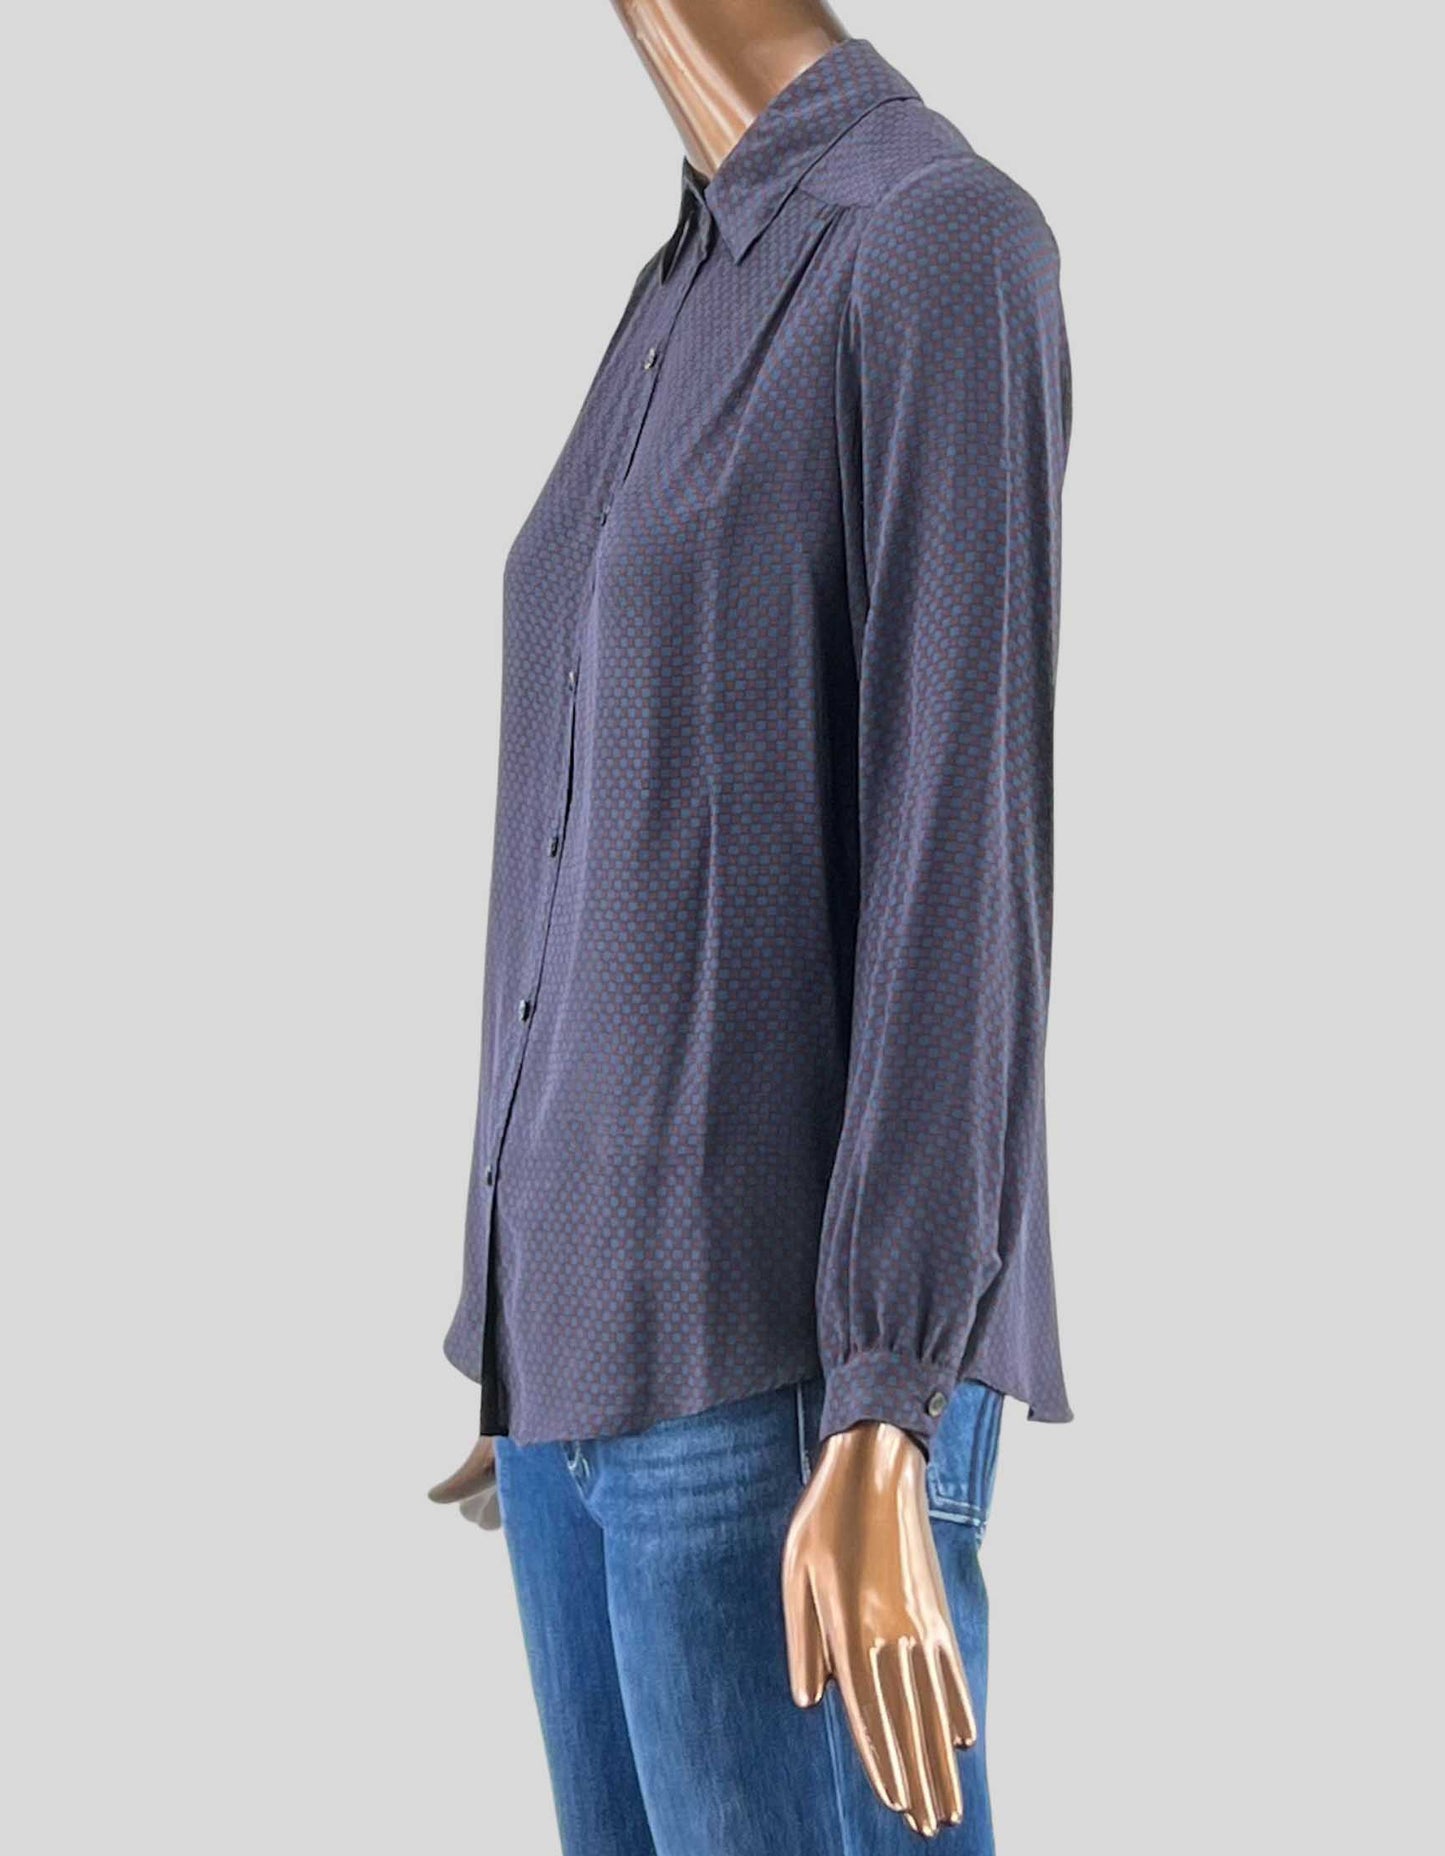 CORRELL CORRELL 100% silk blouse - Medium